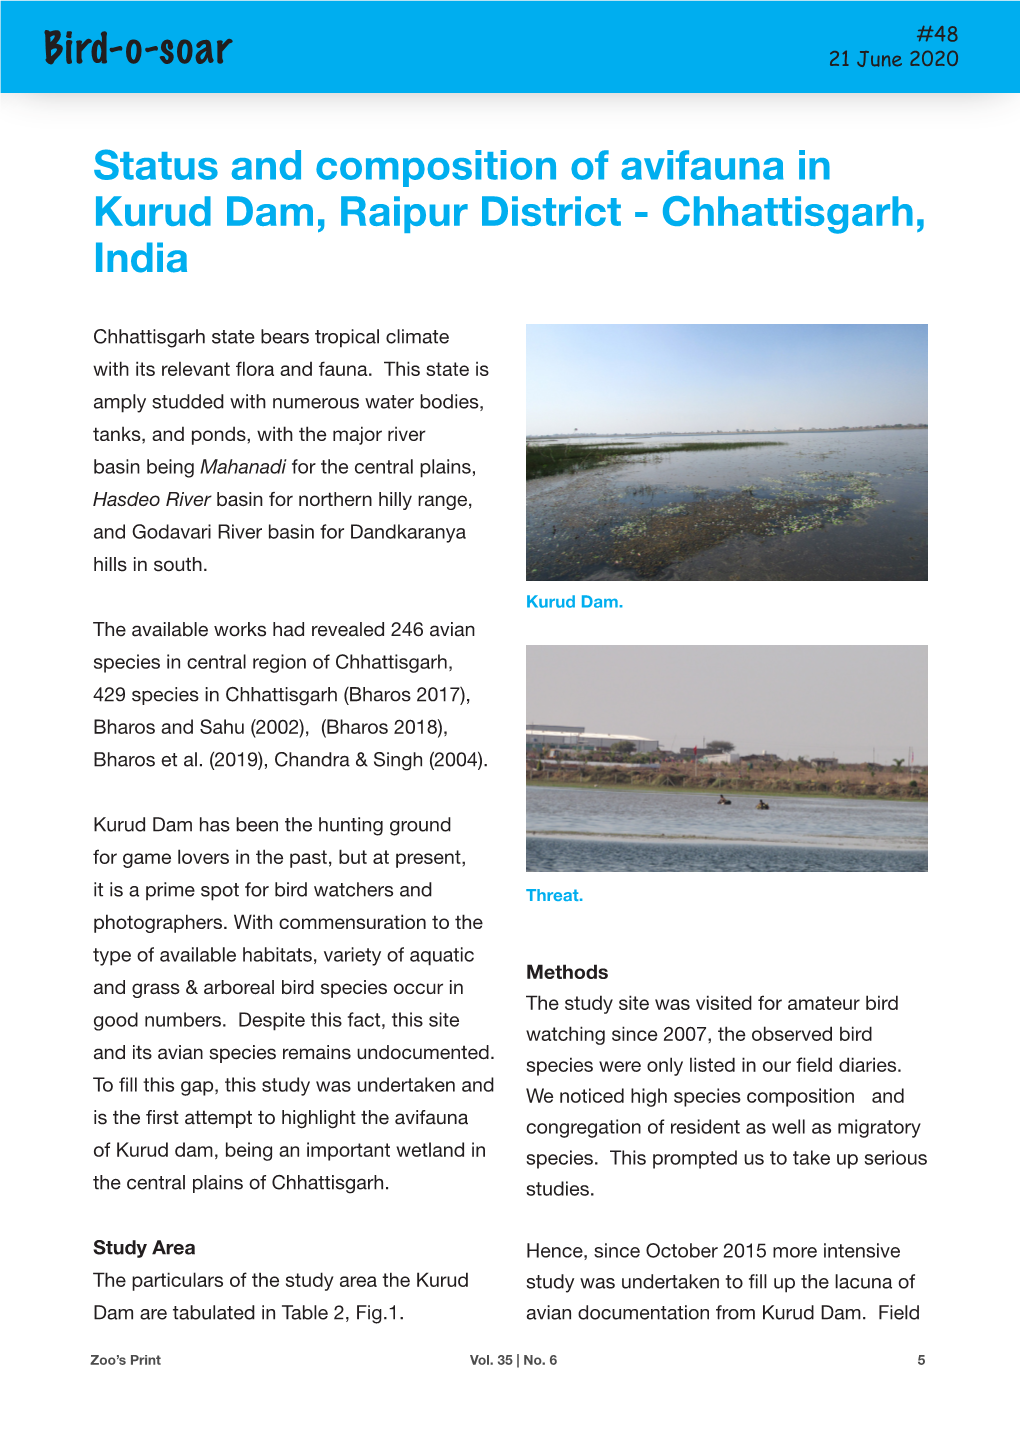 Bird-O-Soar Status and Composition of Avifauna in Kurud Dam, Raipur